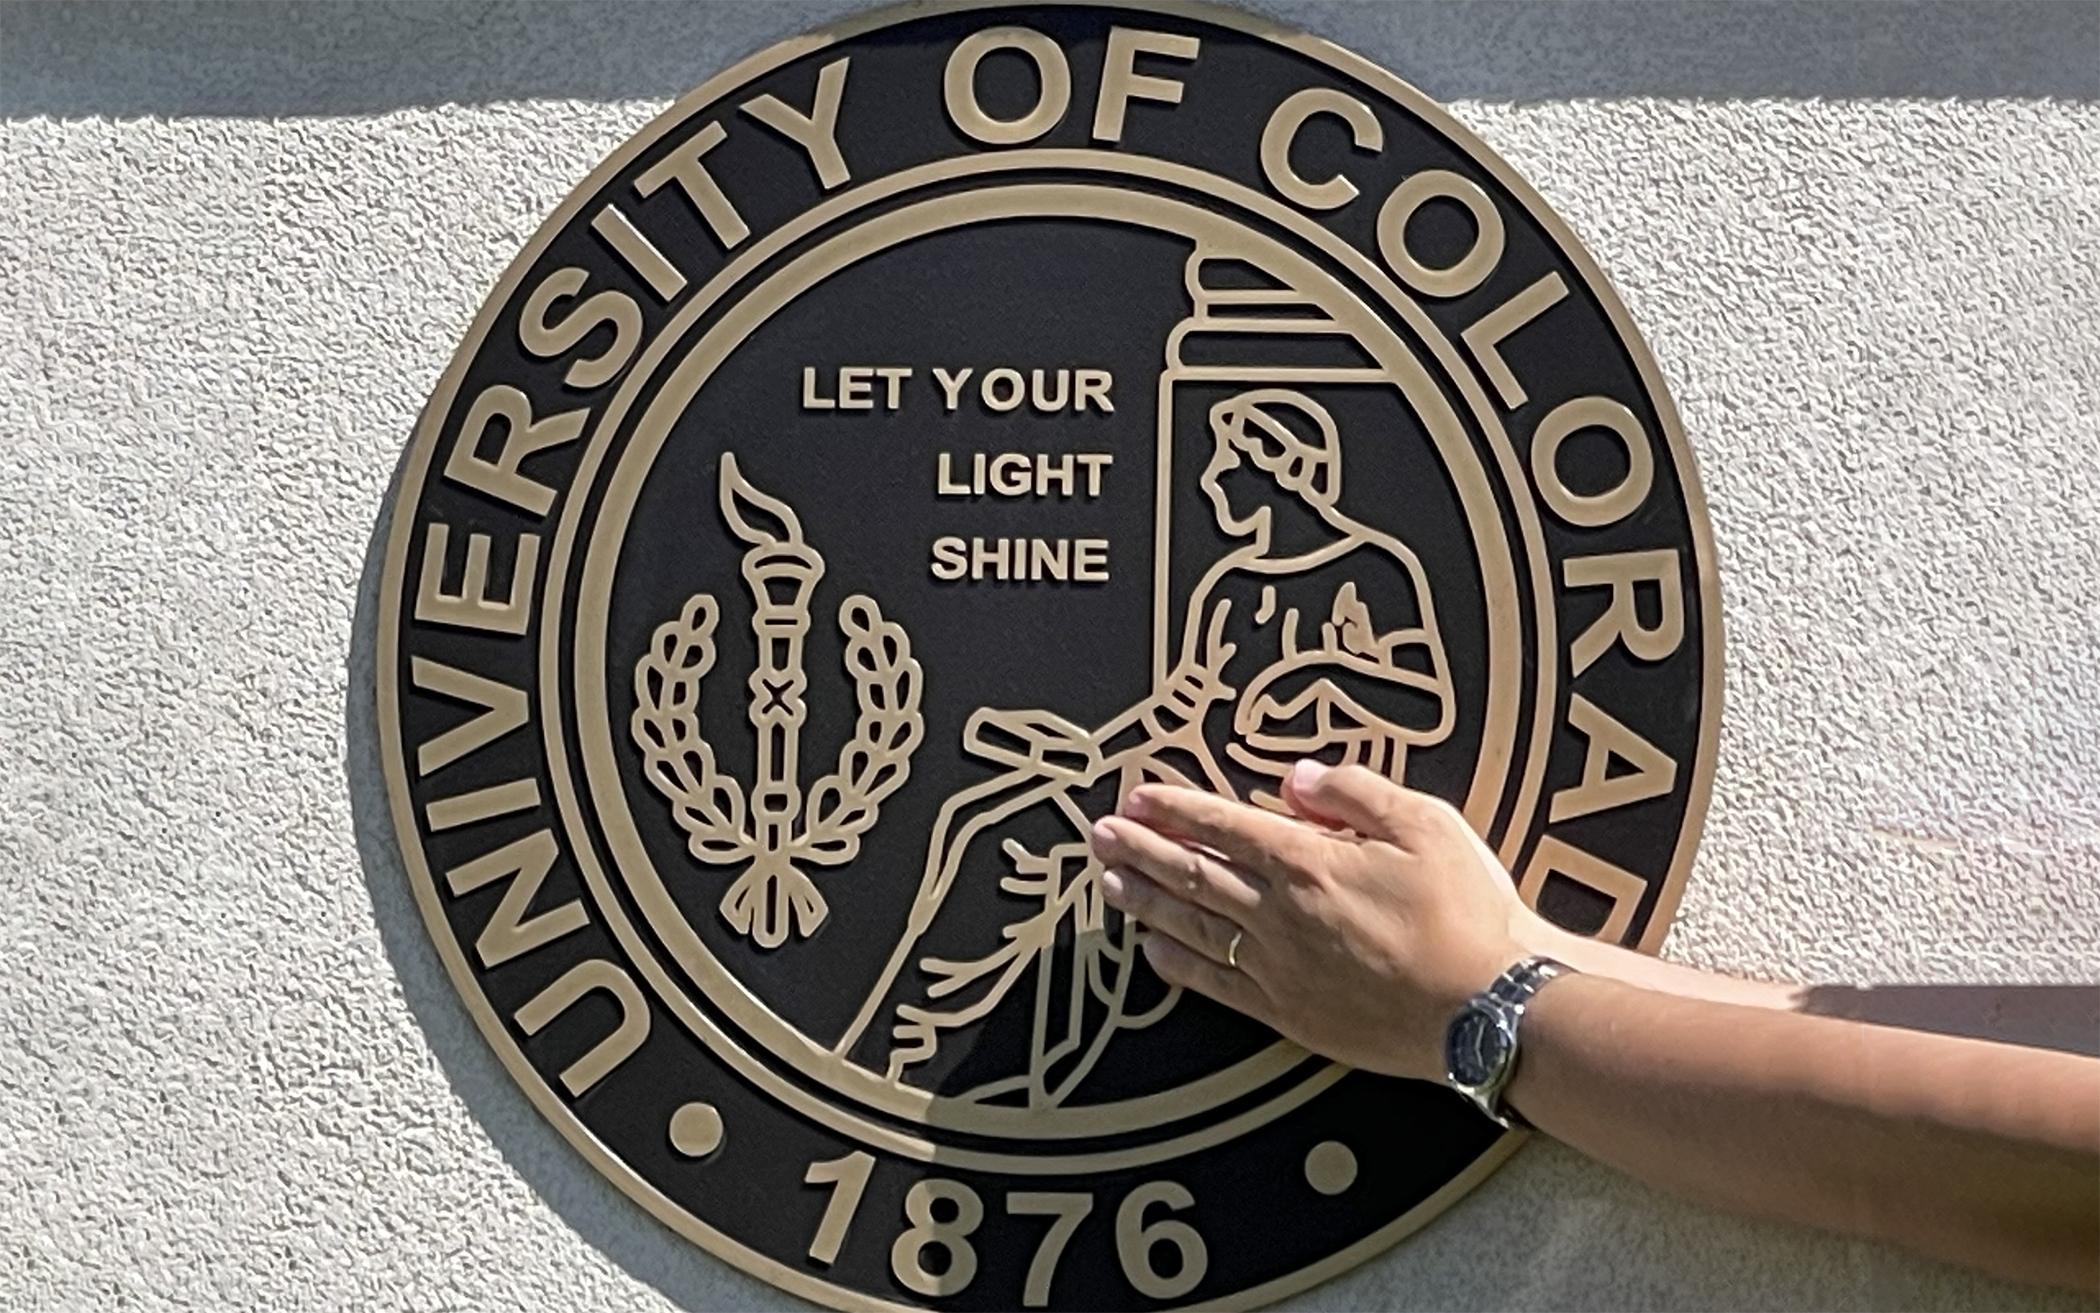 Colorado College Town Church Does Summer Campus Prayer Walks